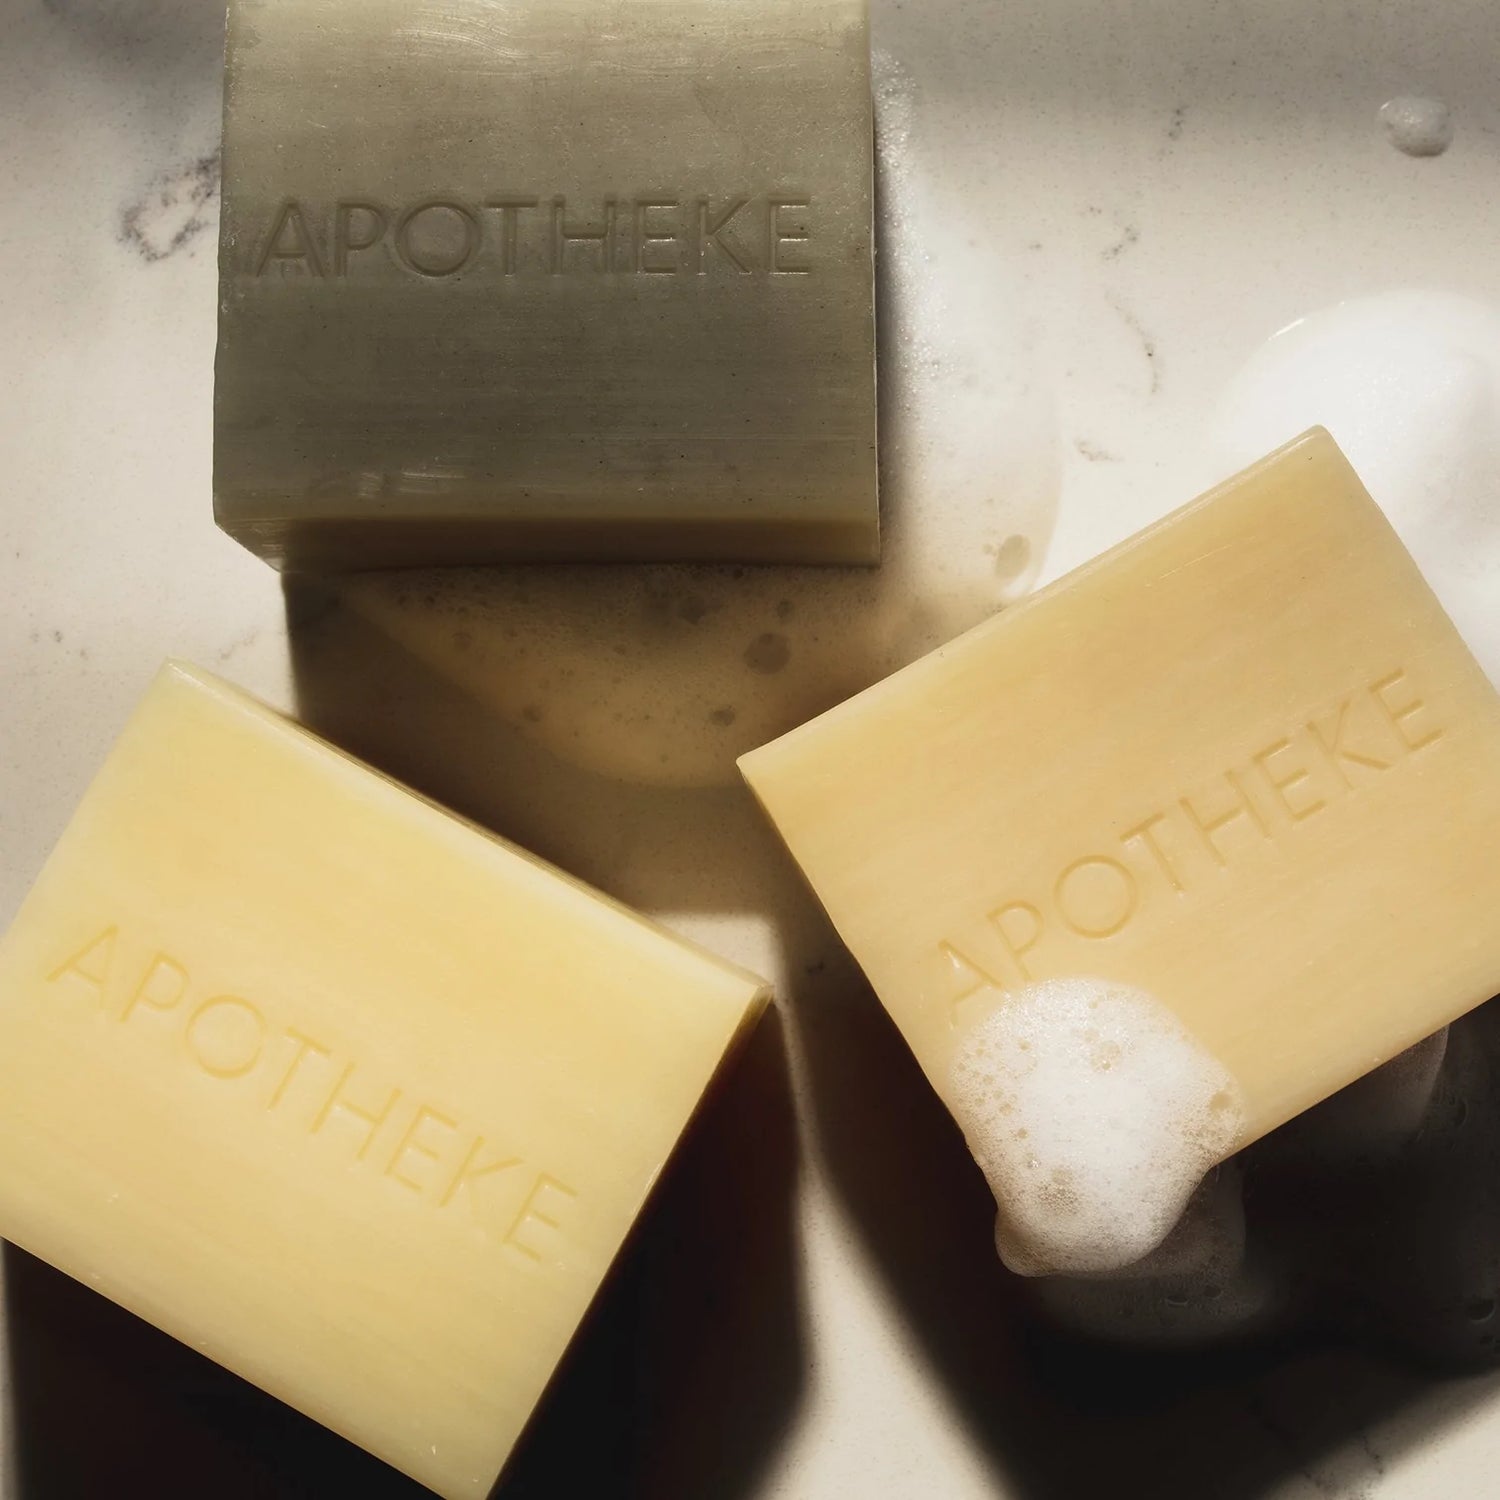 Apotheke Bar Soap, Earl Grey Bitters